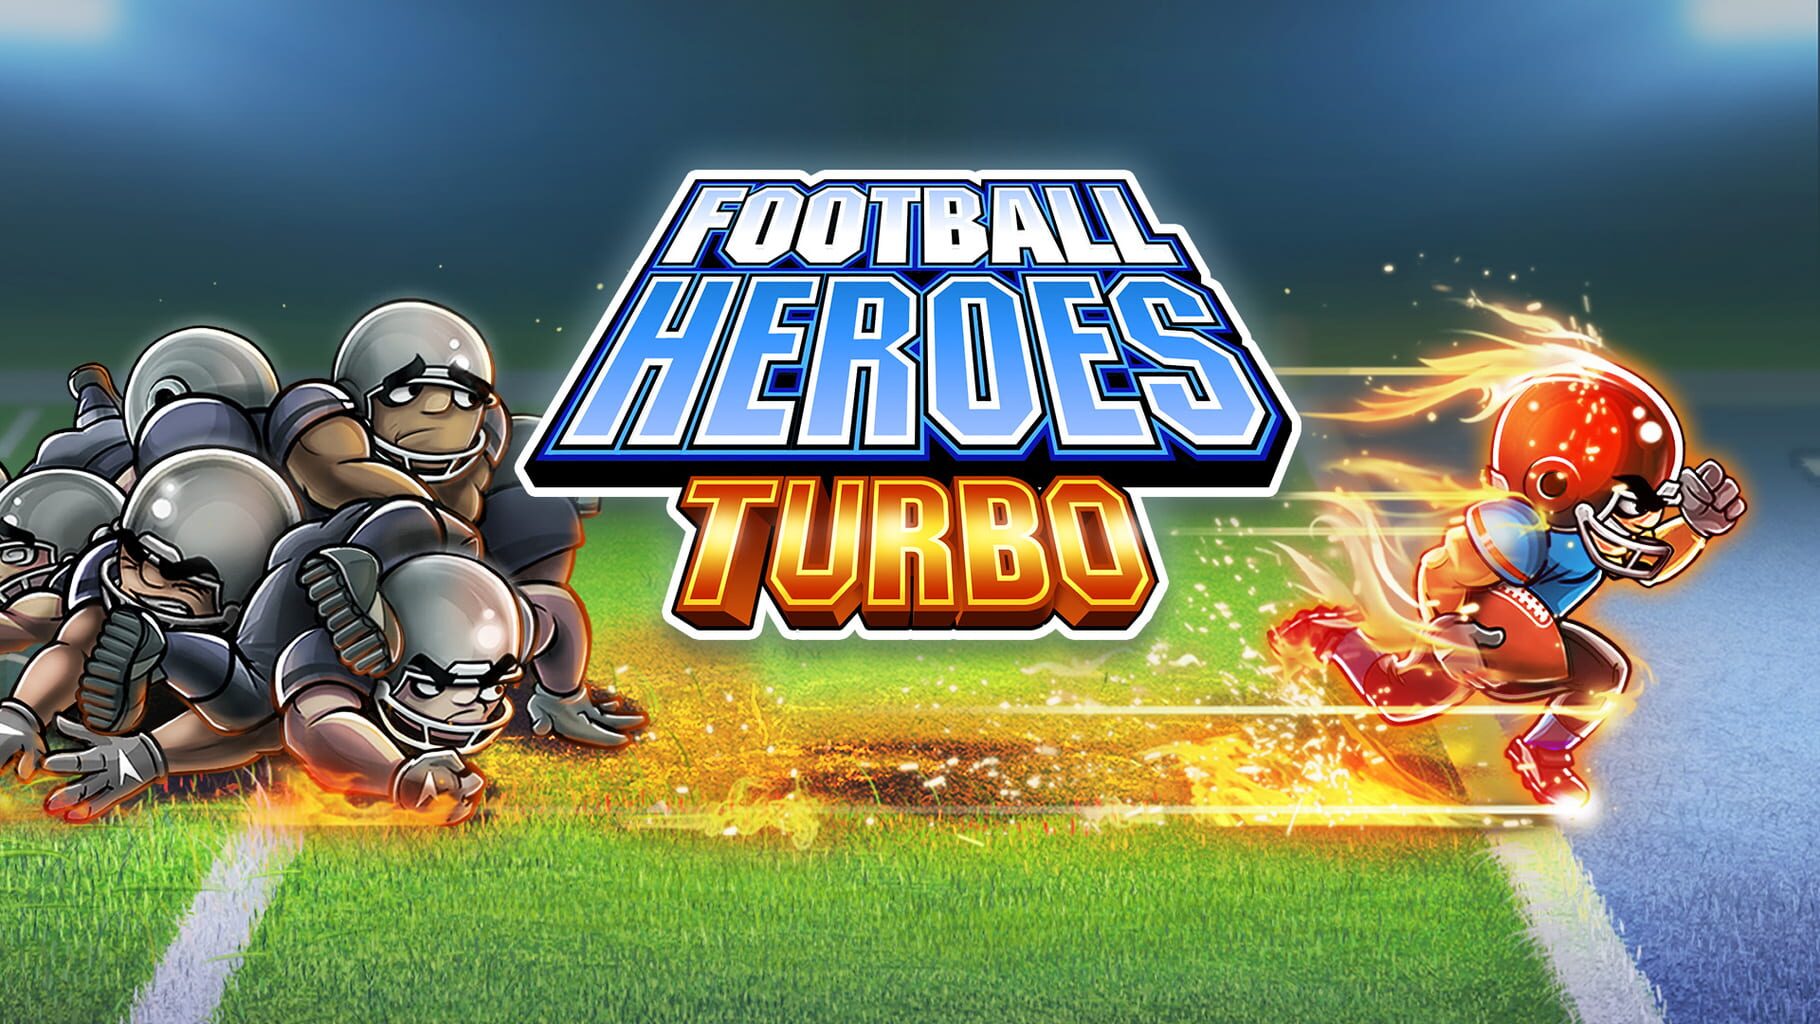 Football Heroes Turbo artwork